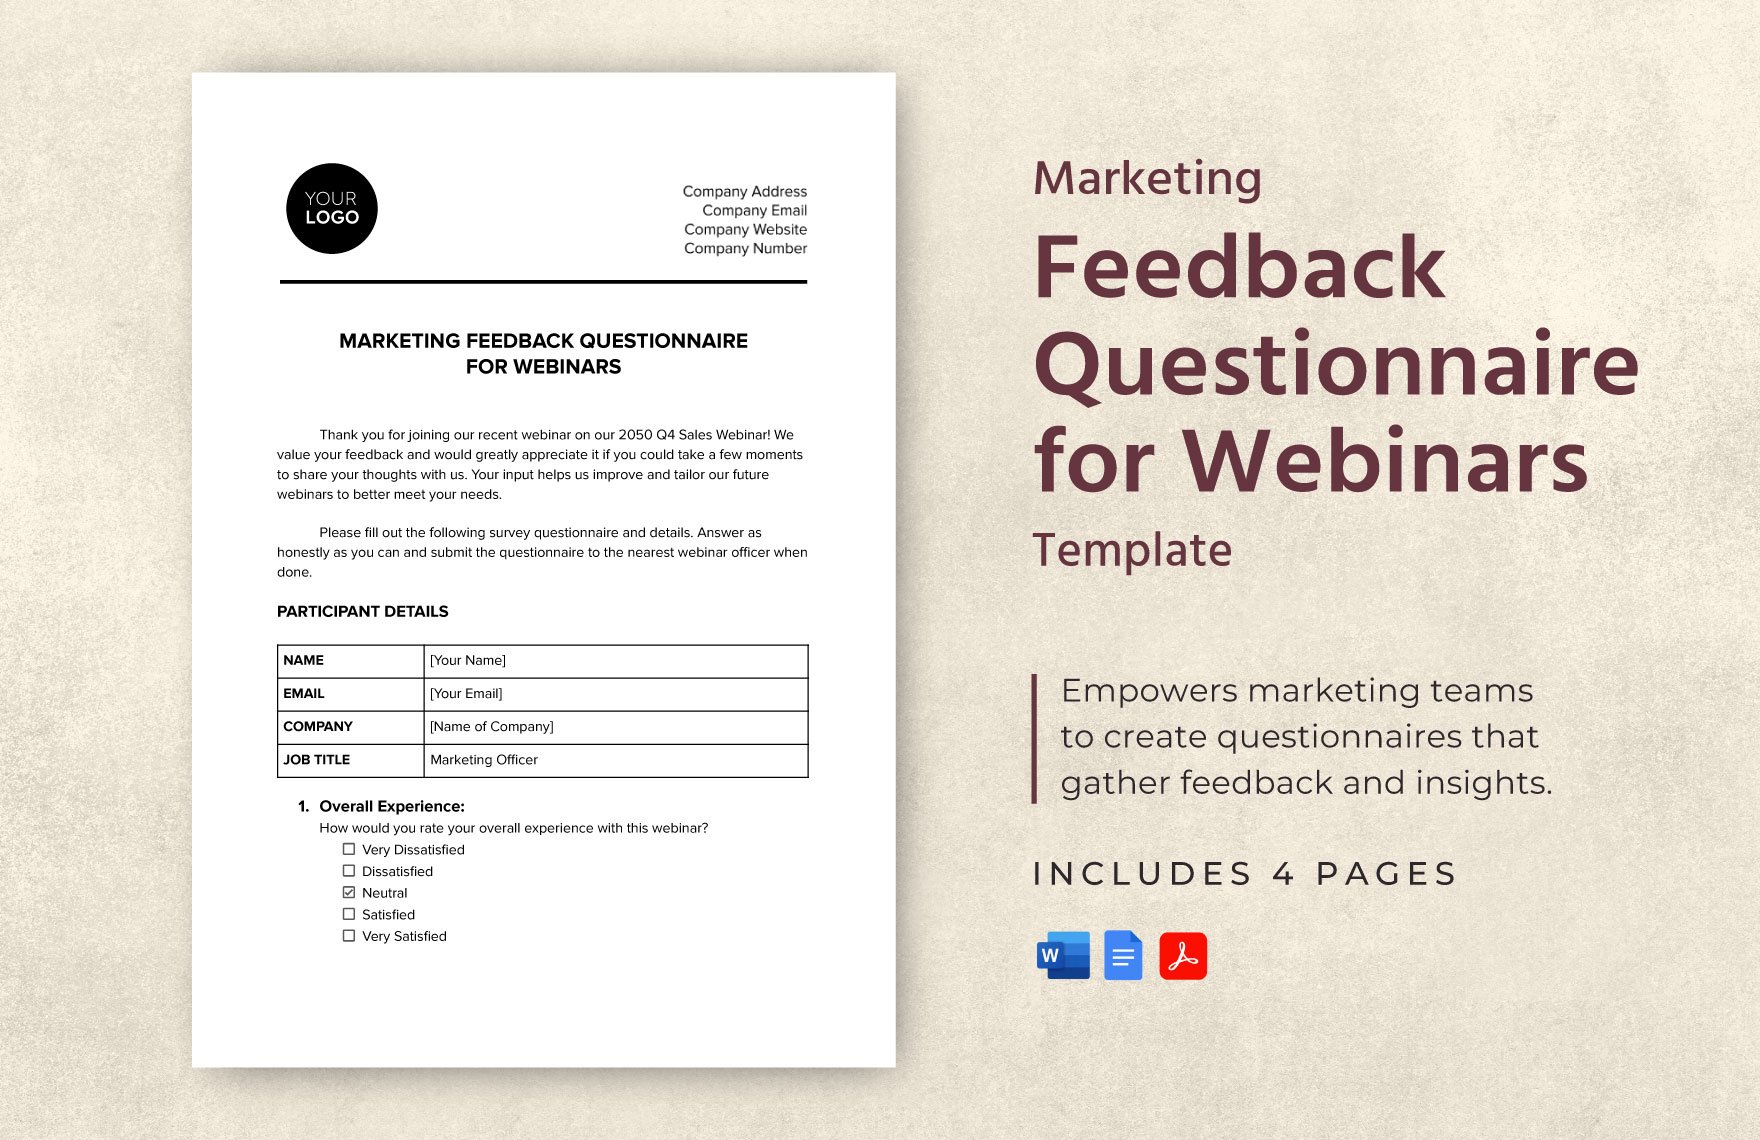 Marketing Feedback Questionnaire for Webinars Template in Word, Google Docs, PDF